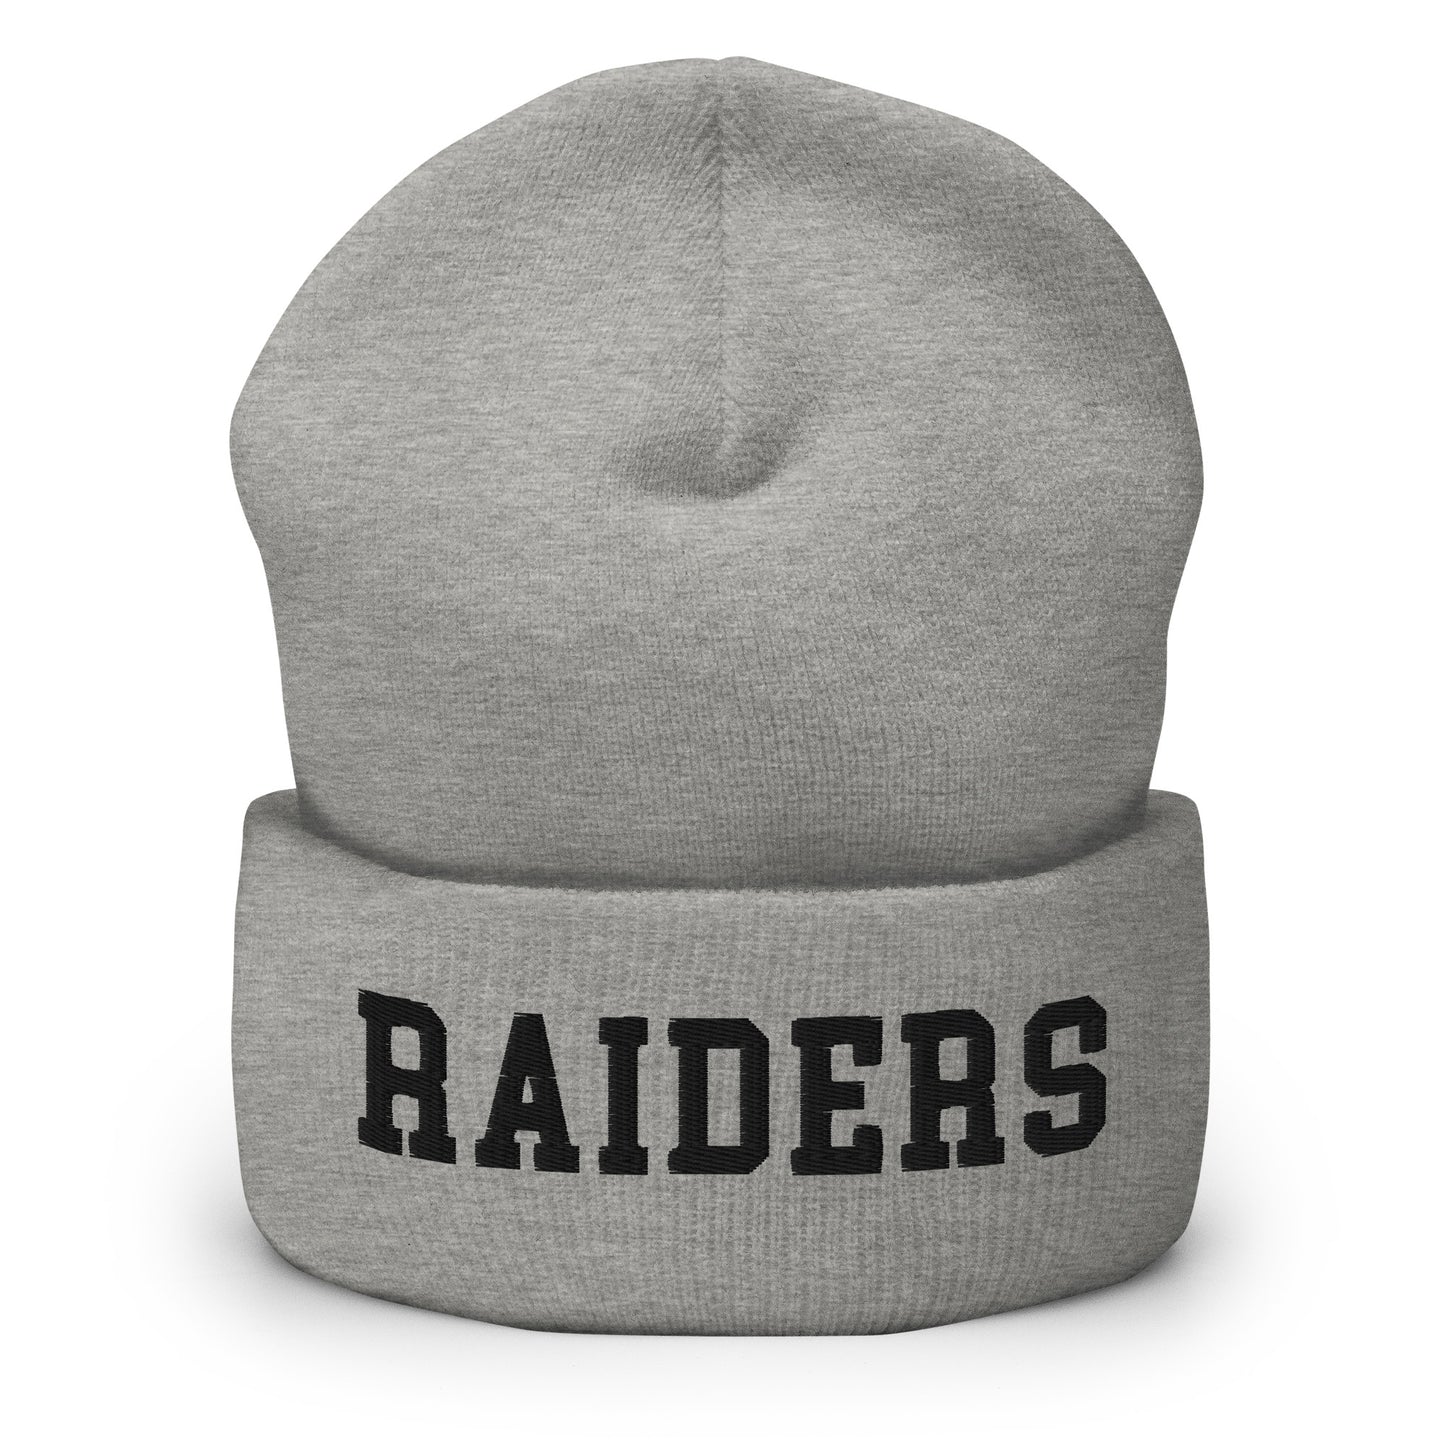 Cuffed Raiders Stocking Cap